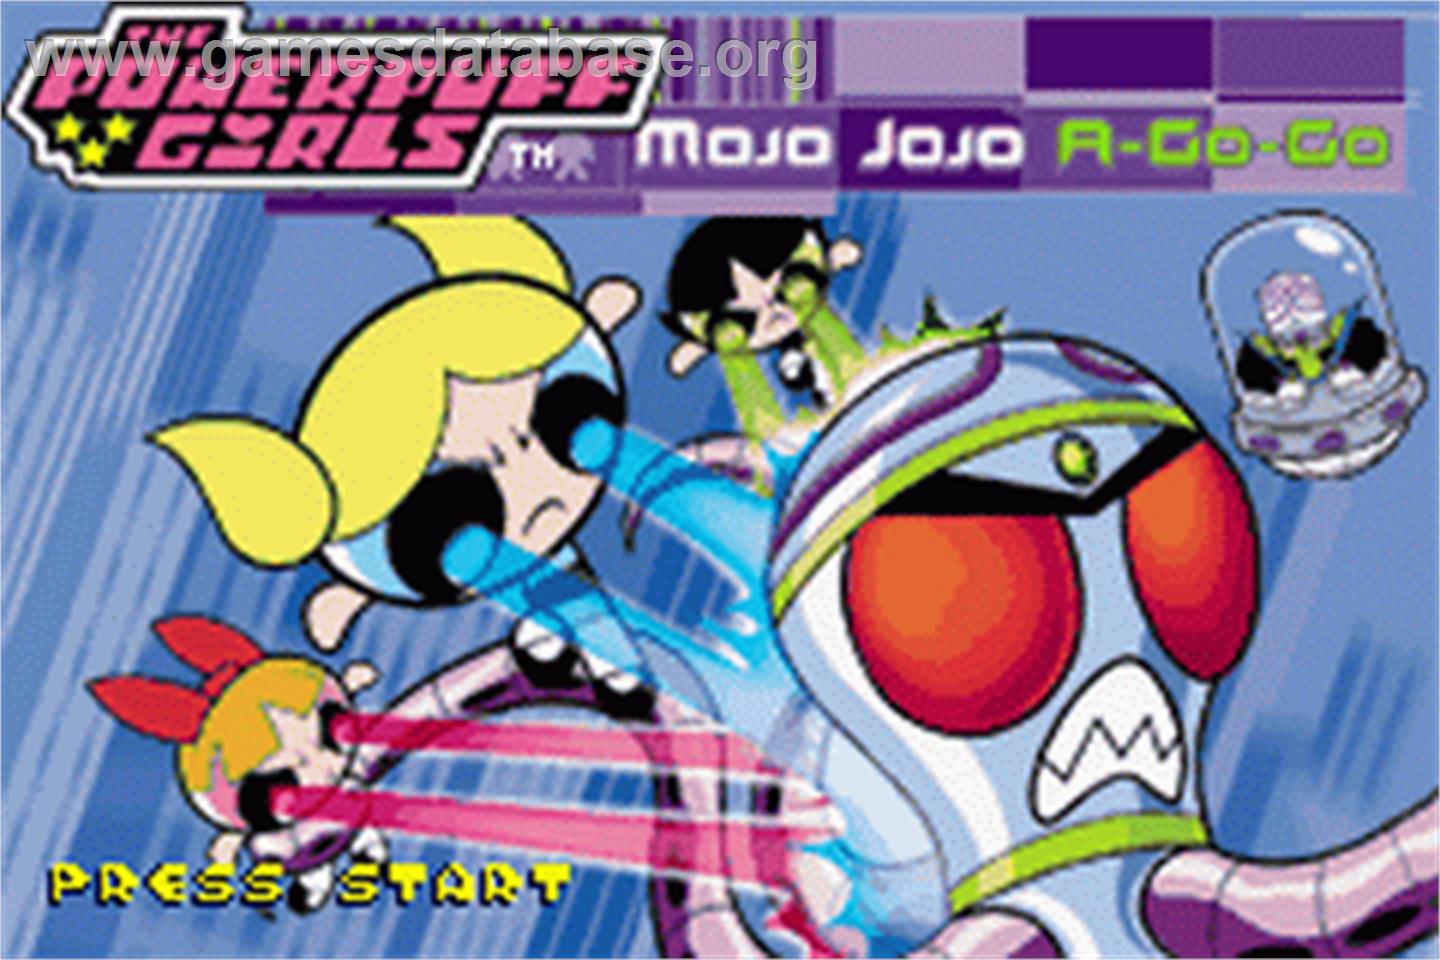 Powerpuff Girls: Mojo Jojo A-Go-Go - Nintendo Game Boy Advance - Artwork - Title Screen